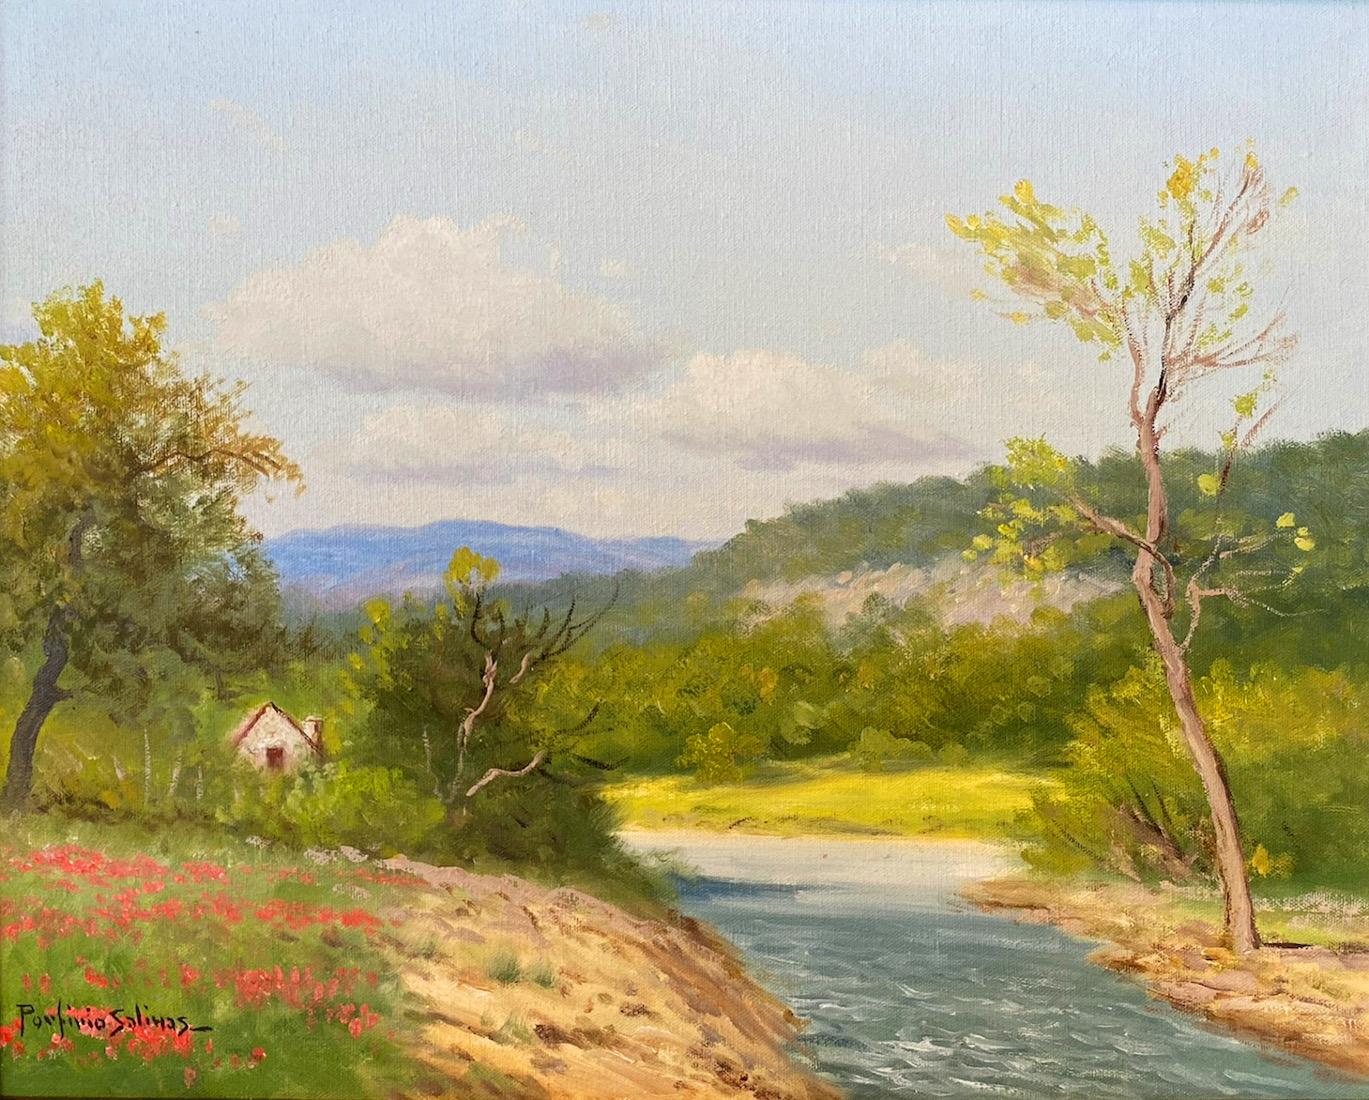 Porfirio Salinas Landscape Painting - "SPRING CREEK PHLOX" IMAGE SIZE: 16 X 20 TEXAS HILL COUNTRY LANDSCAPE